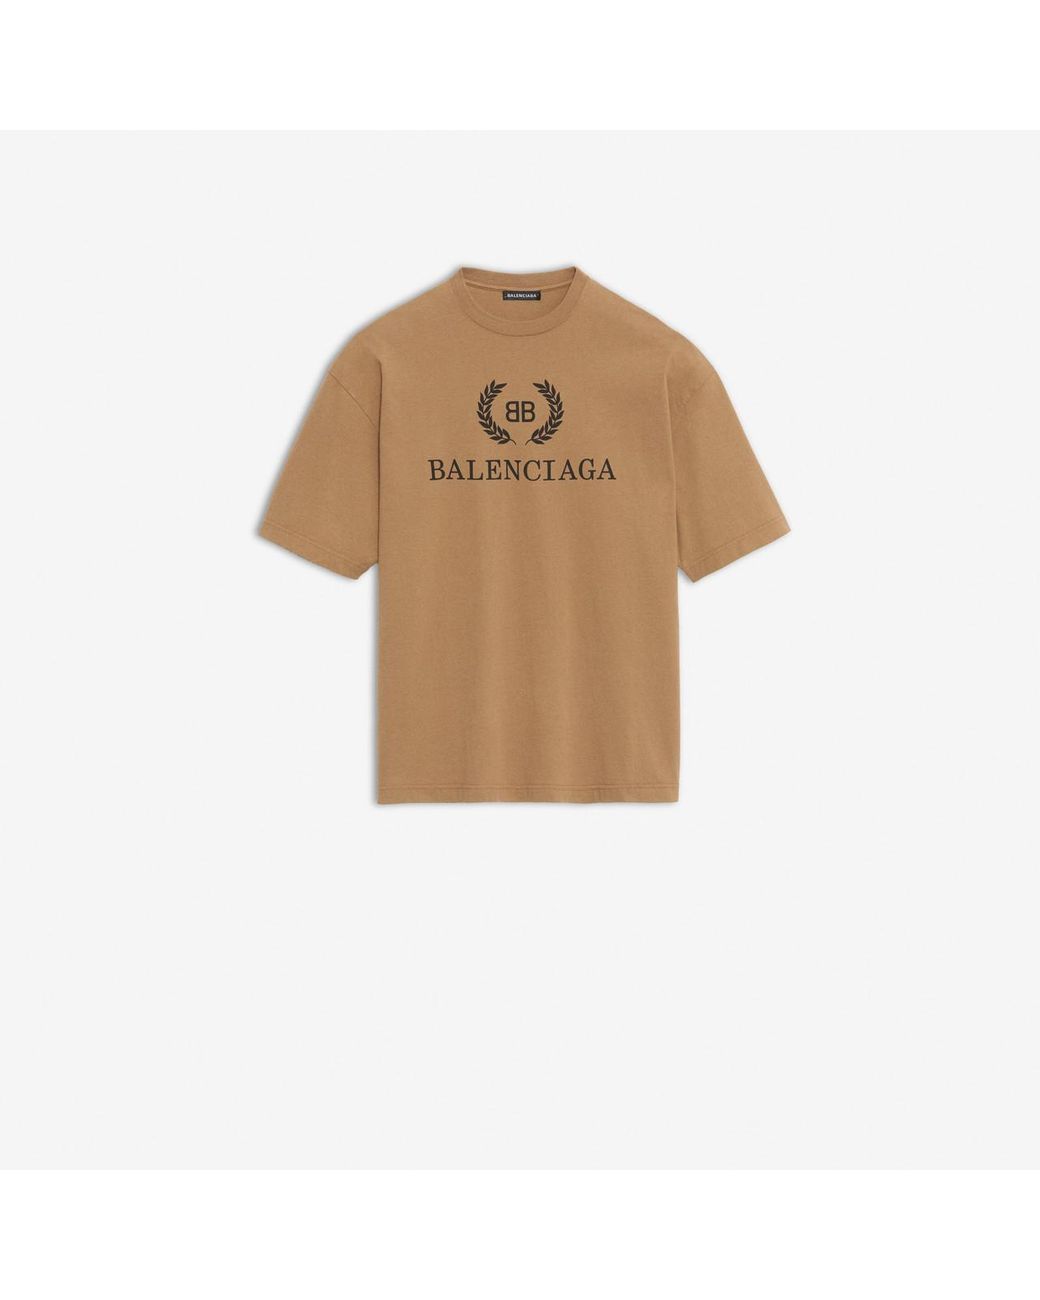 Balenciaga Bb T-shirt in Natural for Men | Lyst